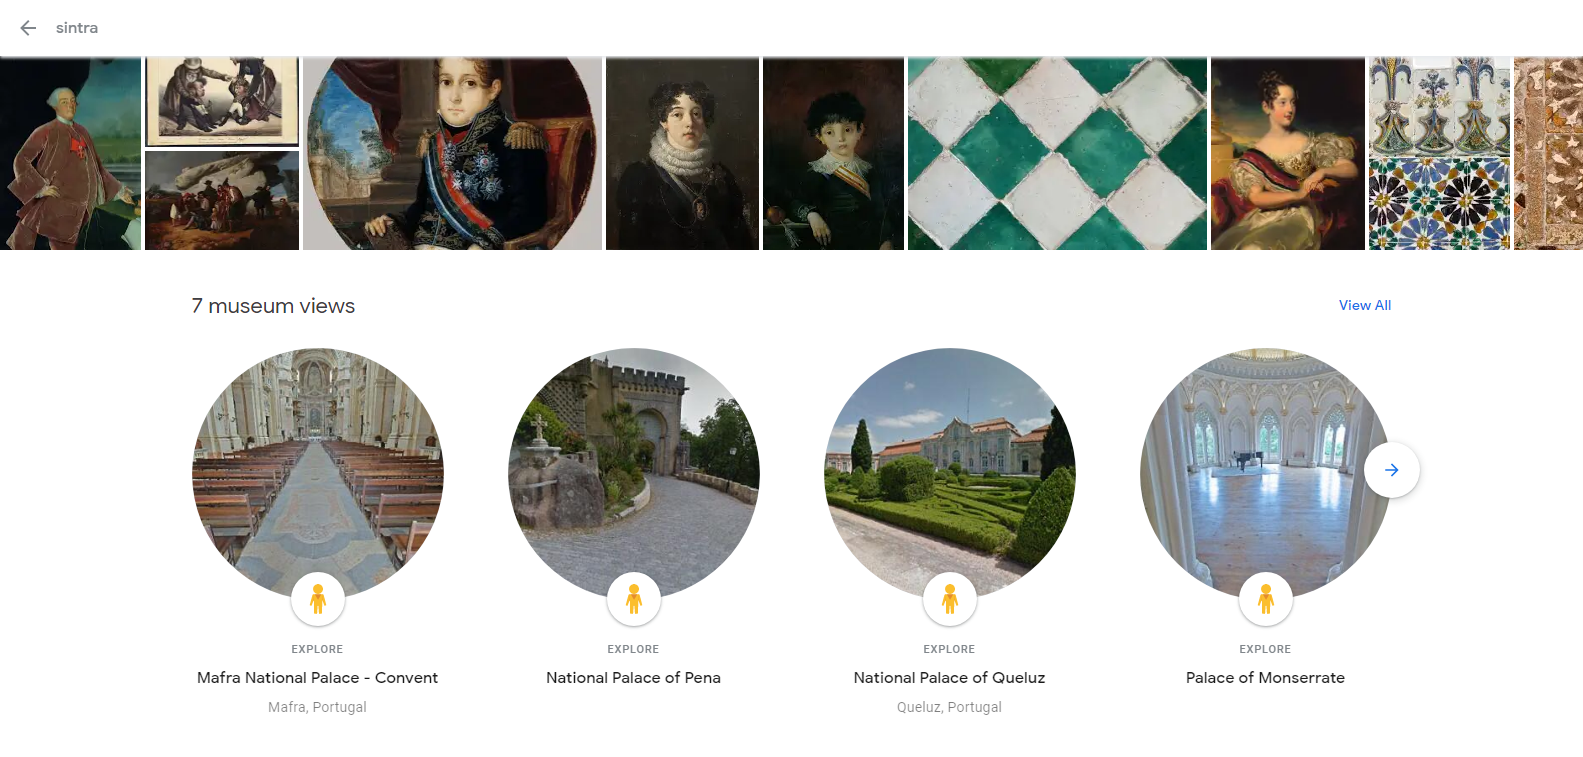 Google arte e cultura sintra visita virtual